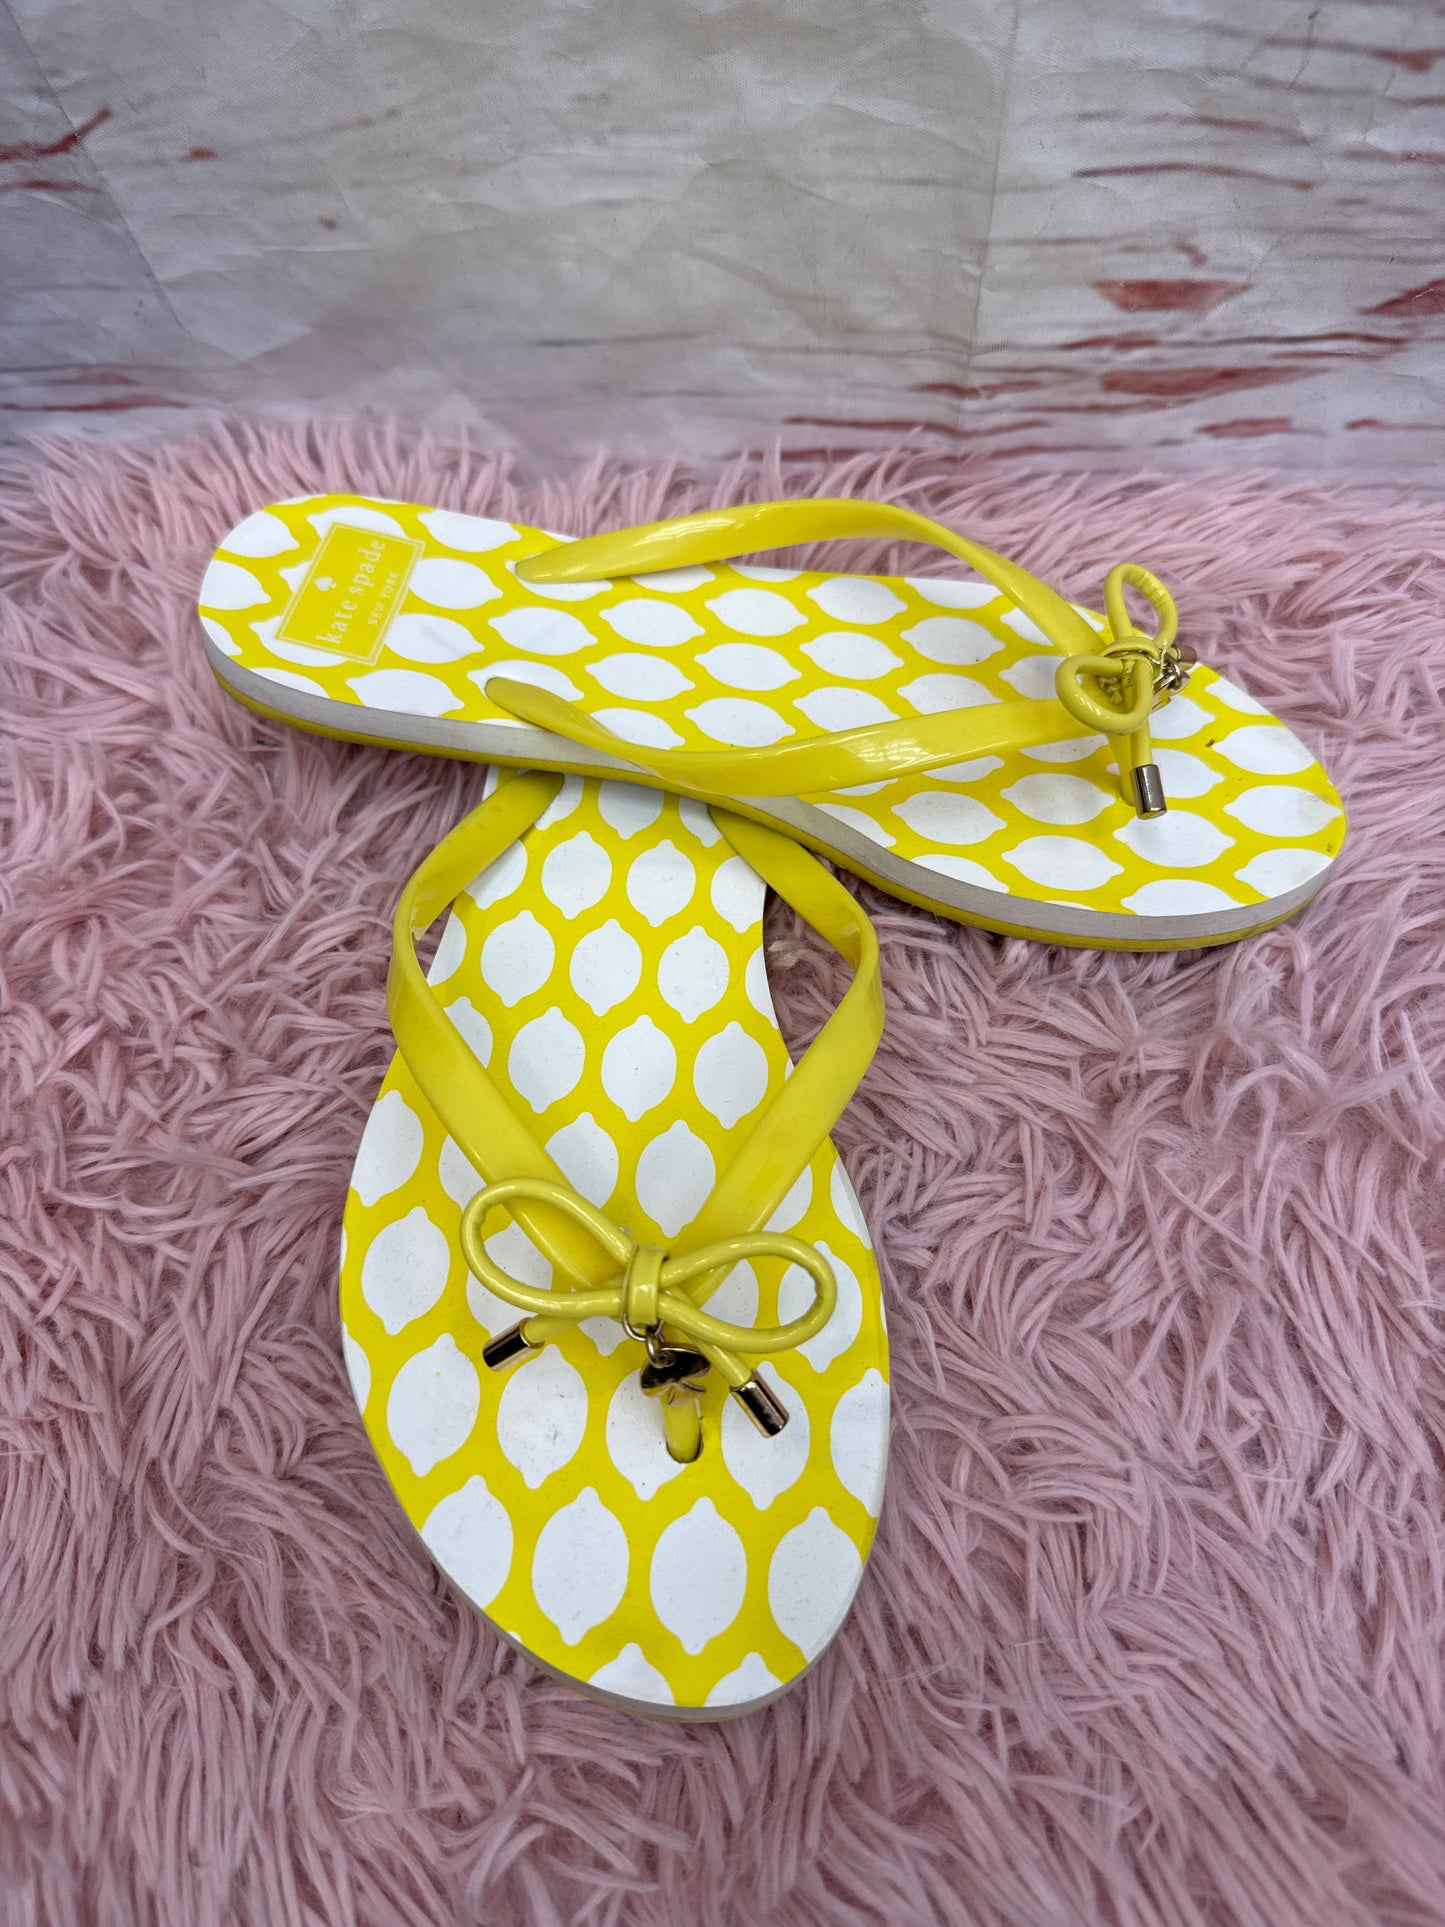 Sandals Flip Flops By Kate Spade  Size: 7.5